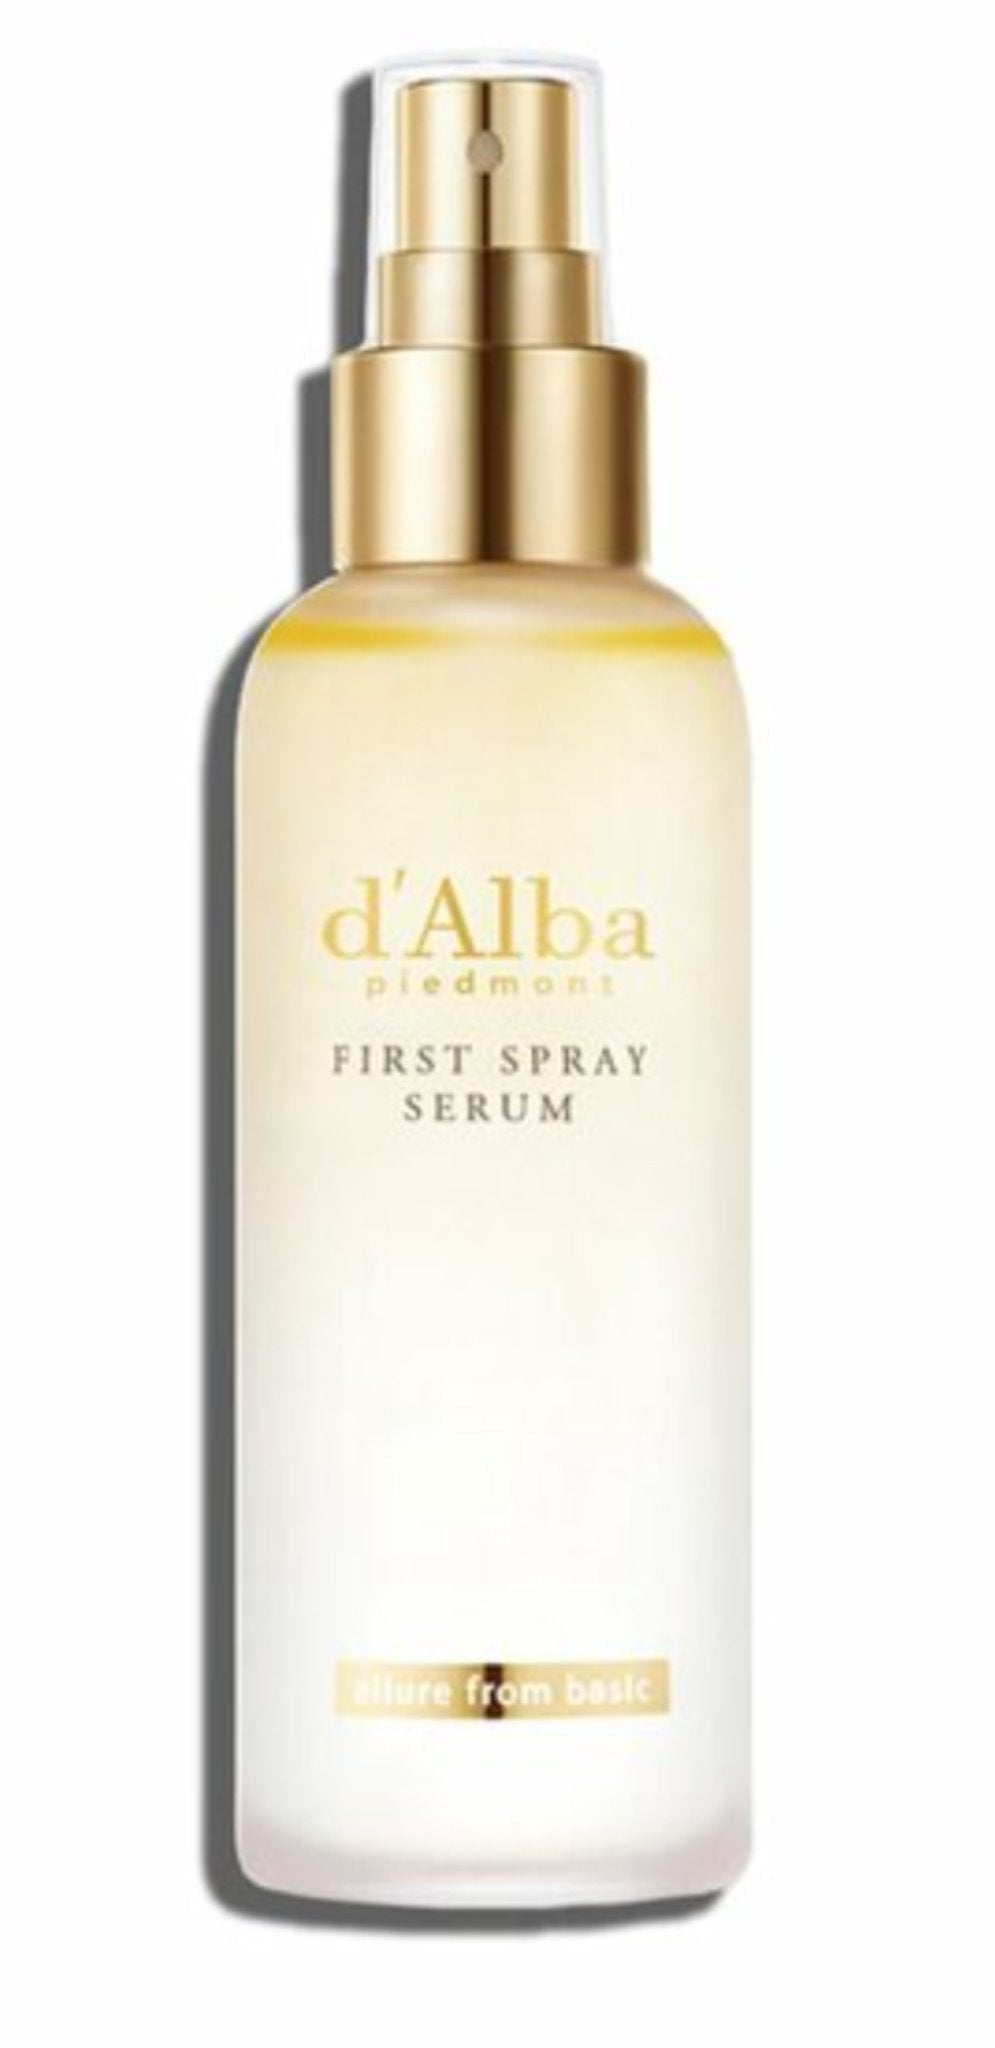 d'Alba PIEDMONT - White Truffle First Spray Serum 100ml - The Face Method